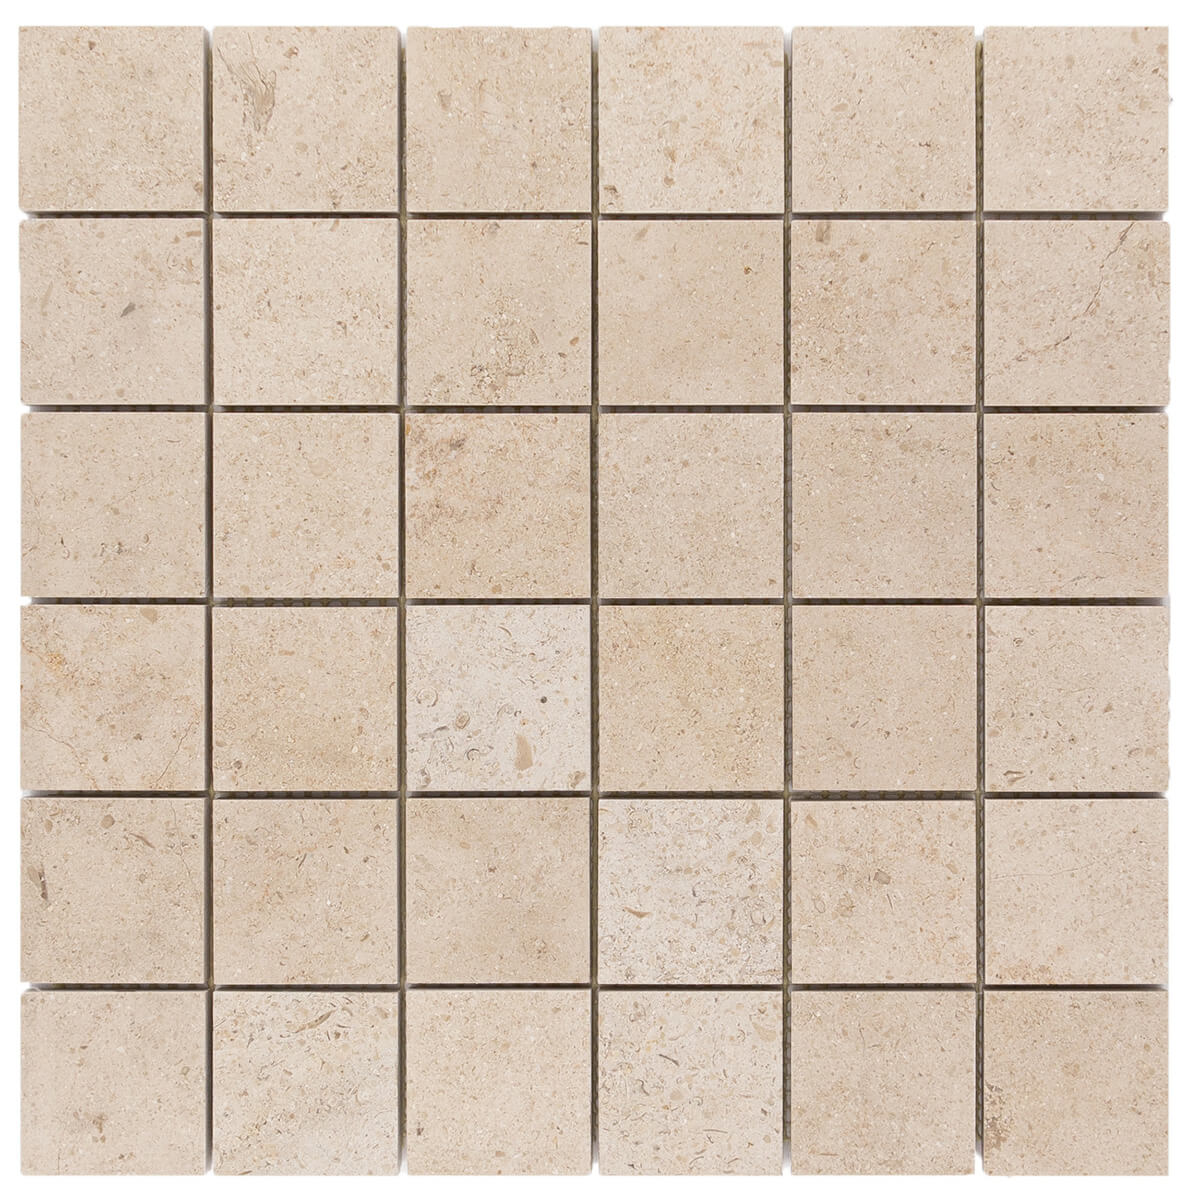 haussmann fonjone gascogne beige limestone square mosaic tile 2x2 honed